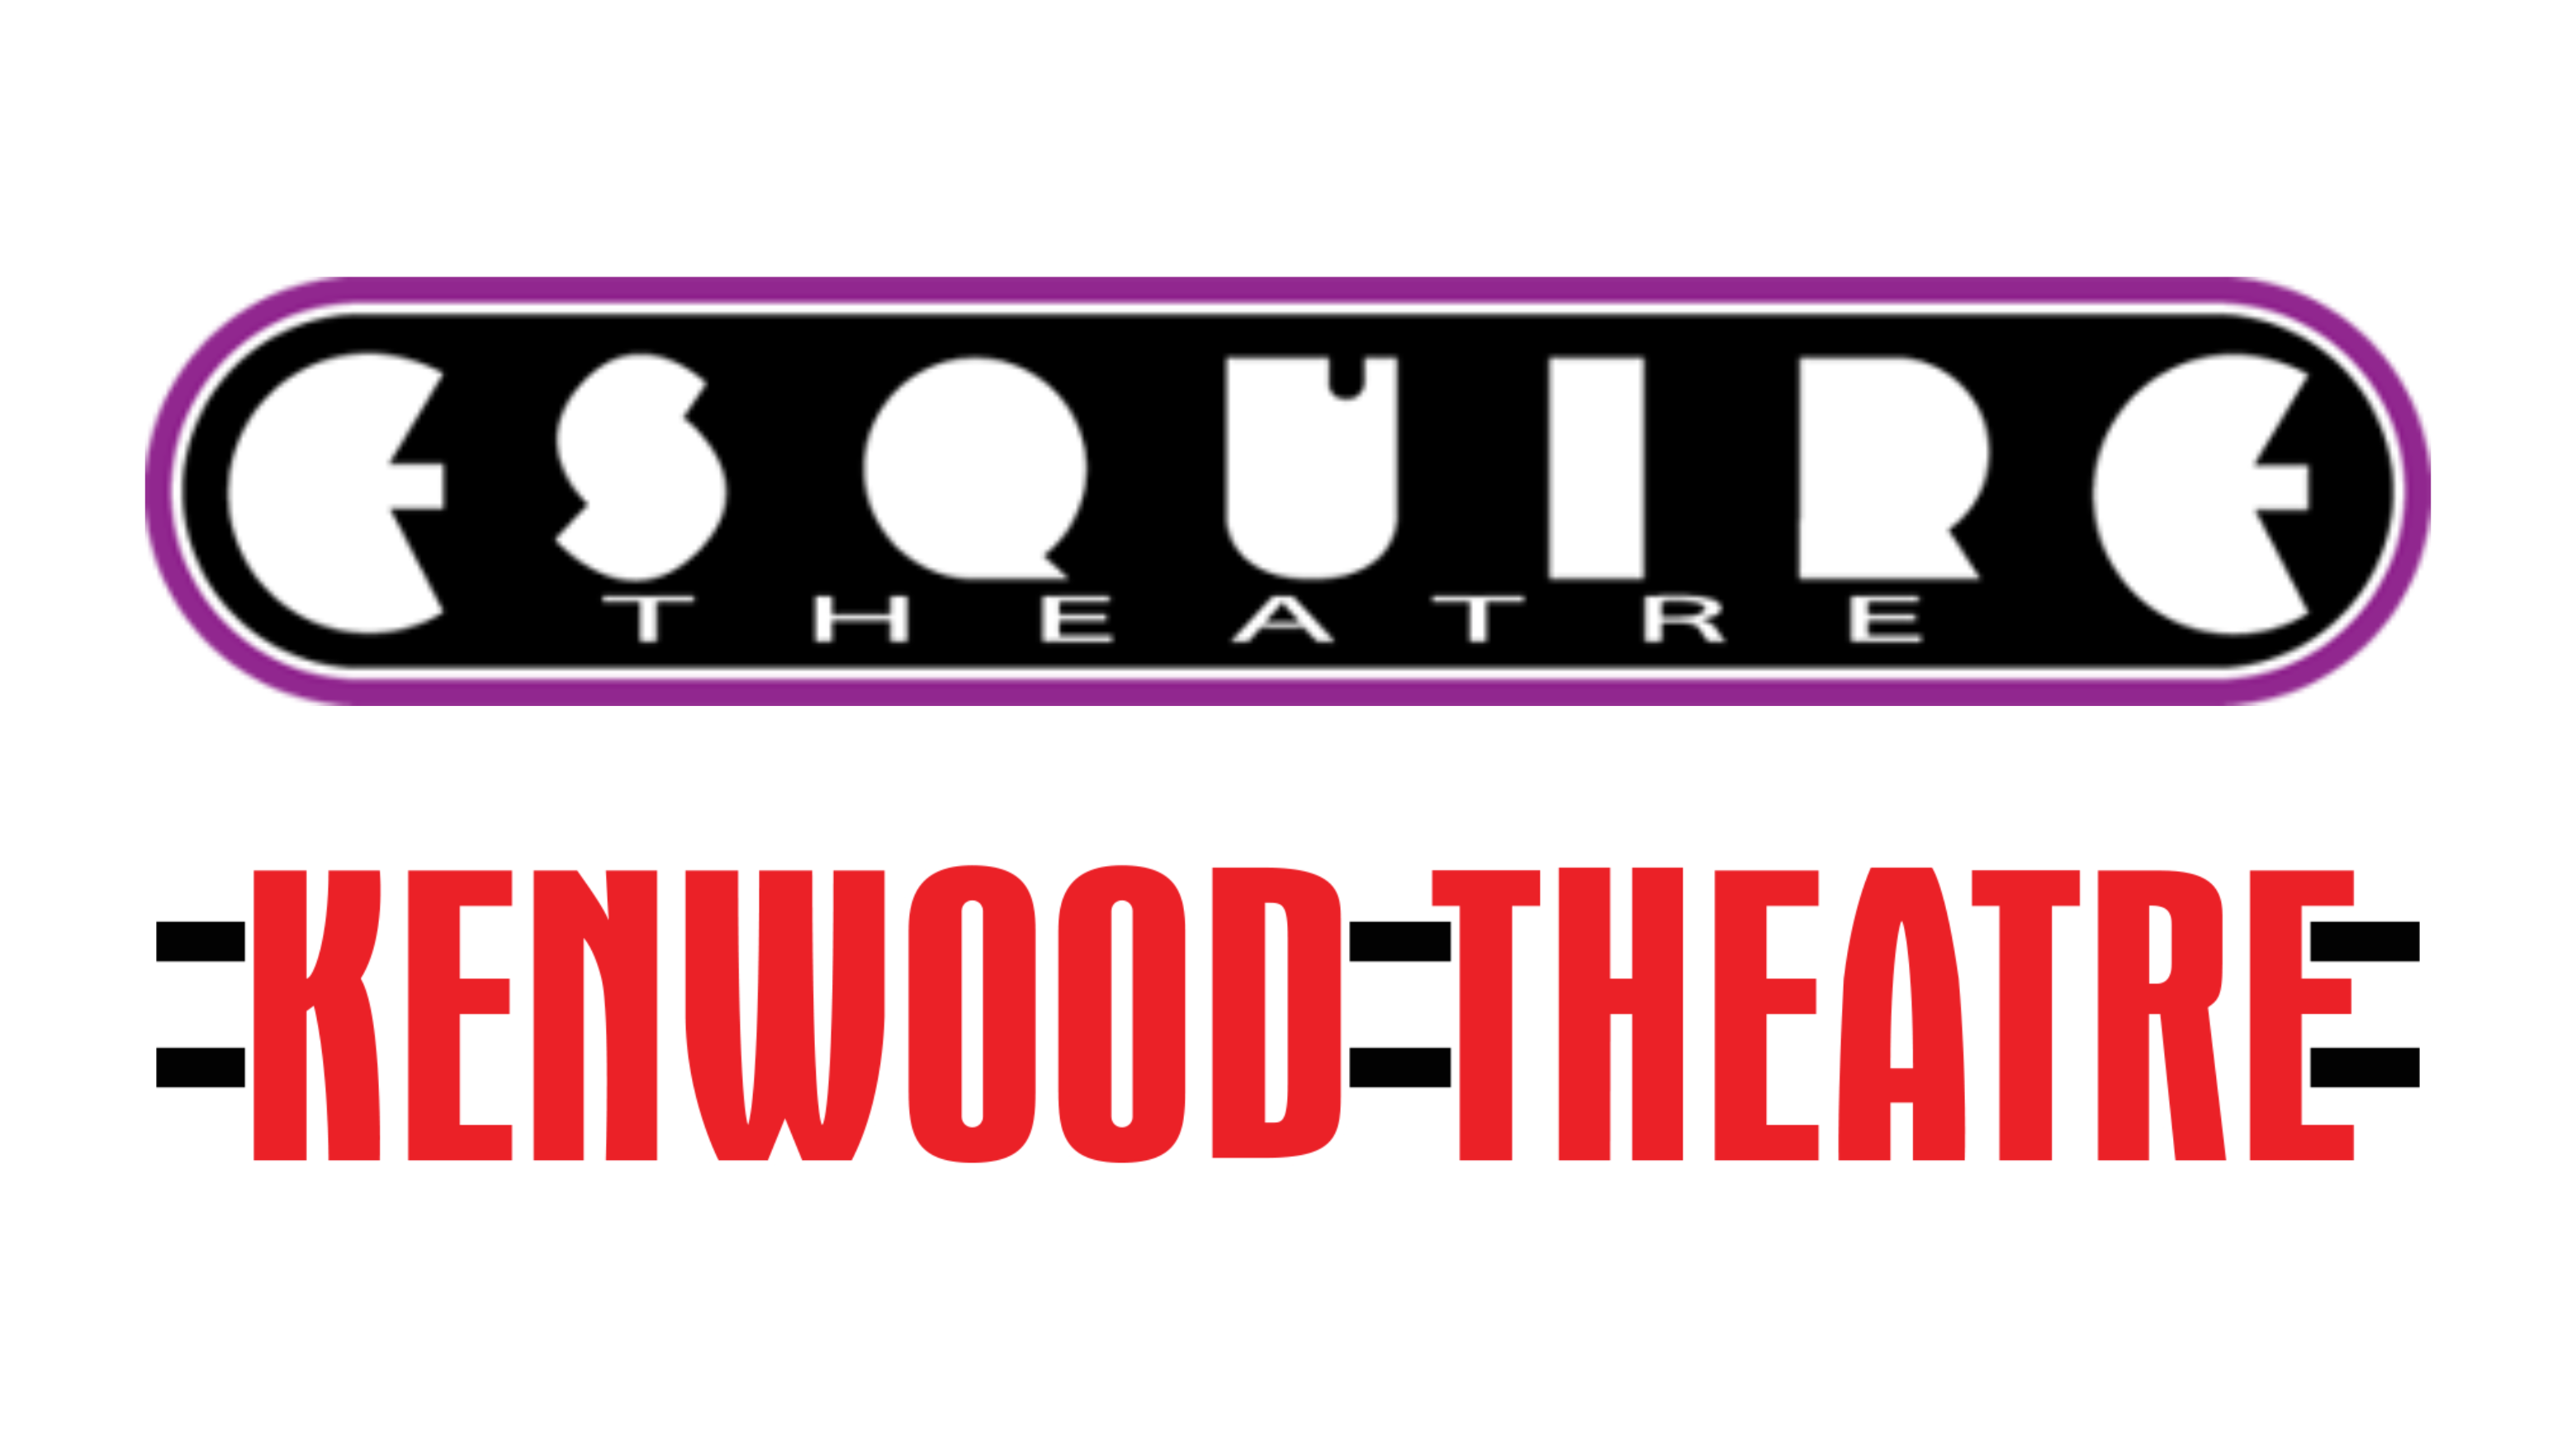 Esquire Theatre and Kenwood Theatre